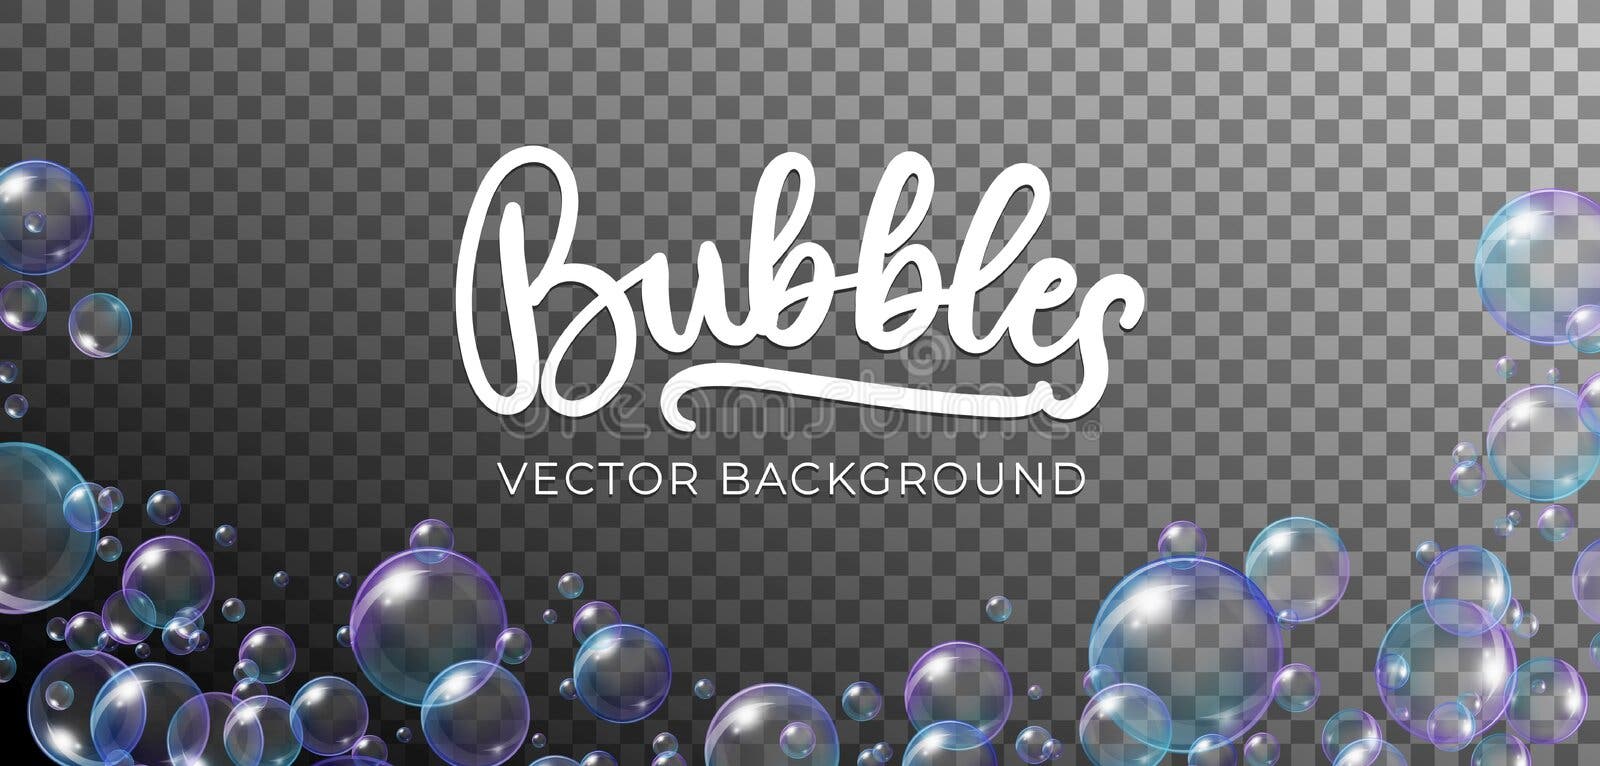 Bubbles Images  Free HD Backgrounds, PNGs, Vectors & Templates